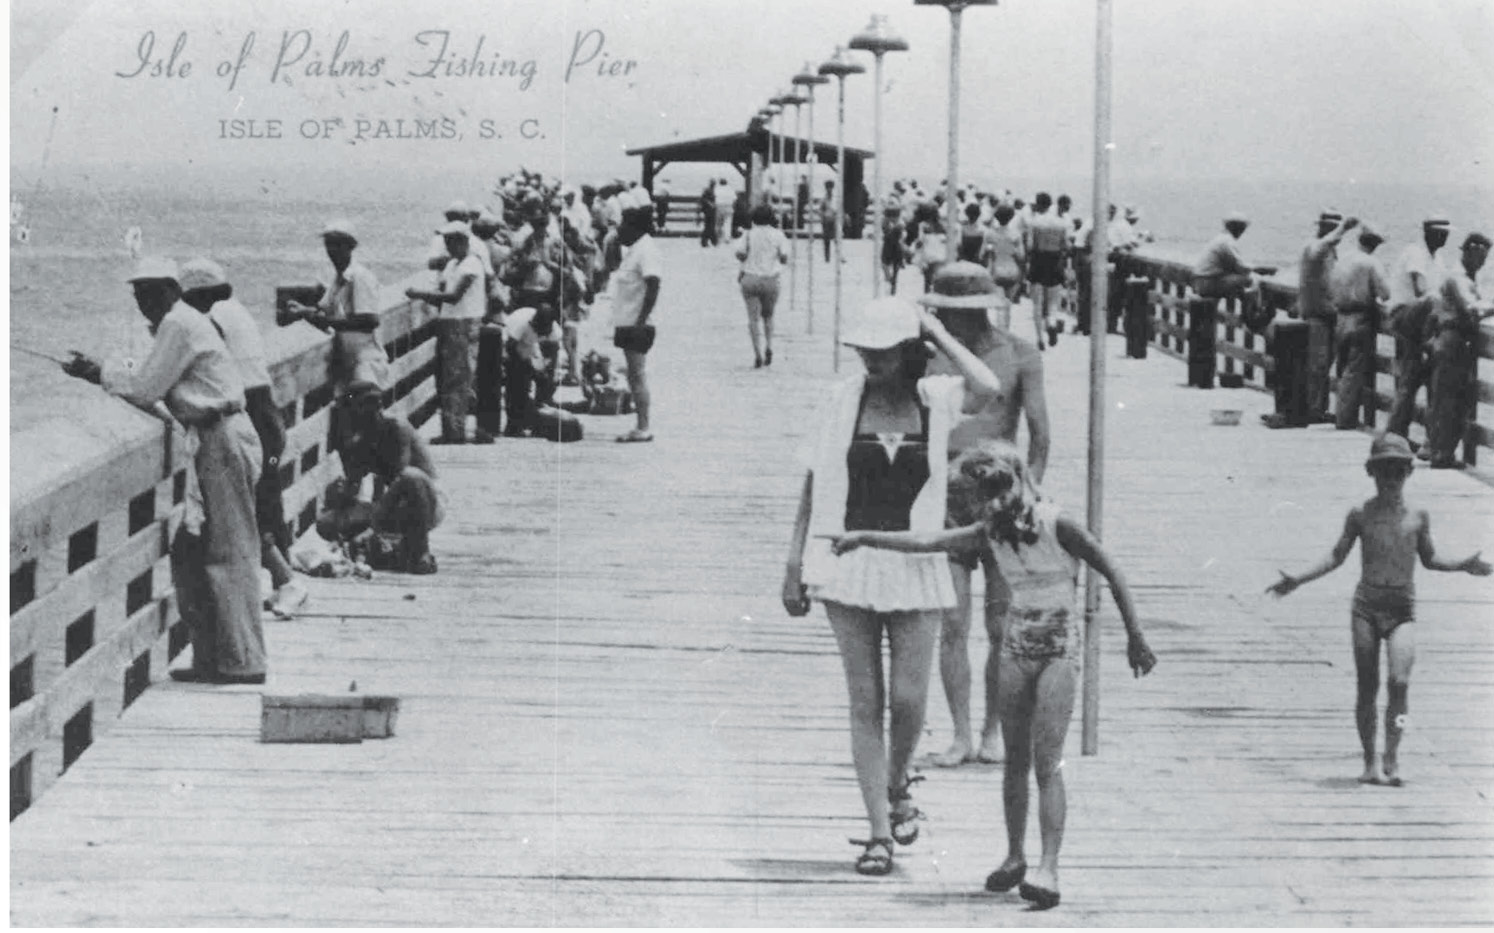 The fishing pier, circa 1940